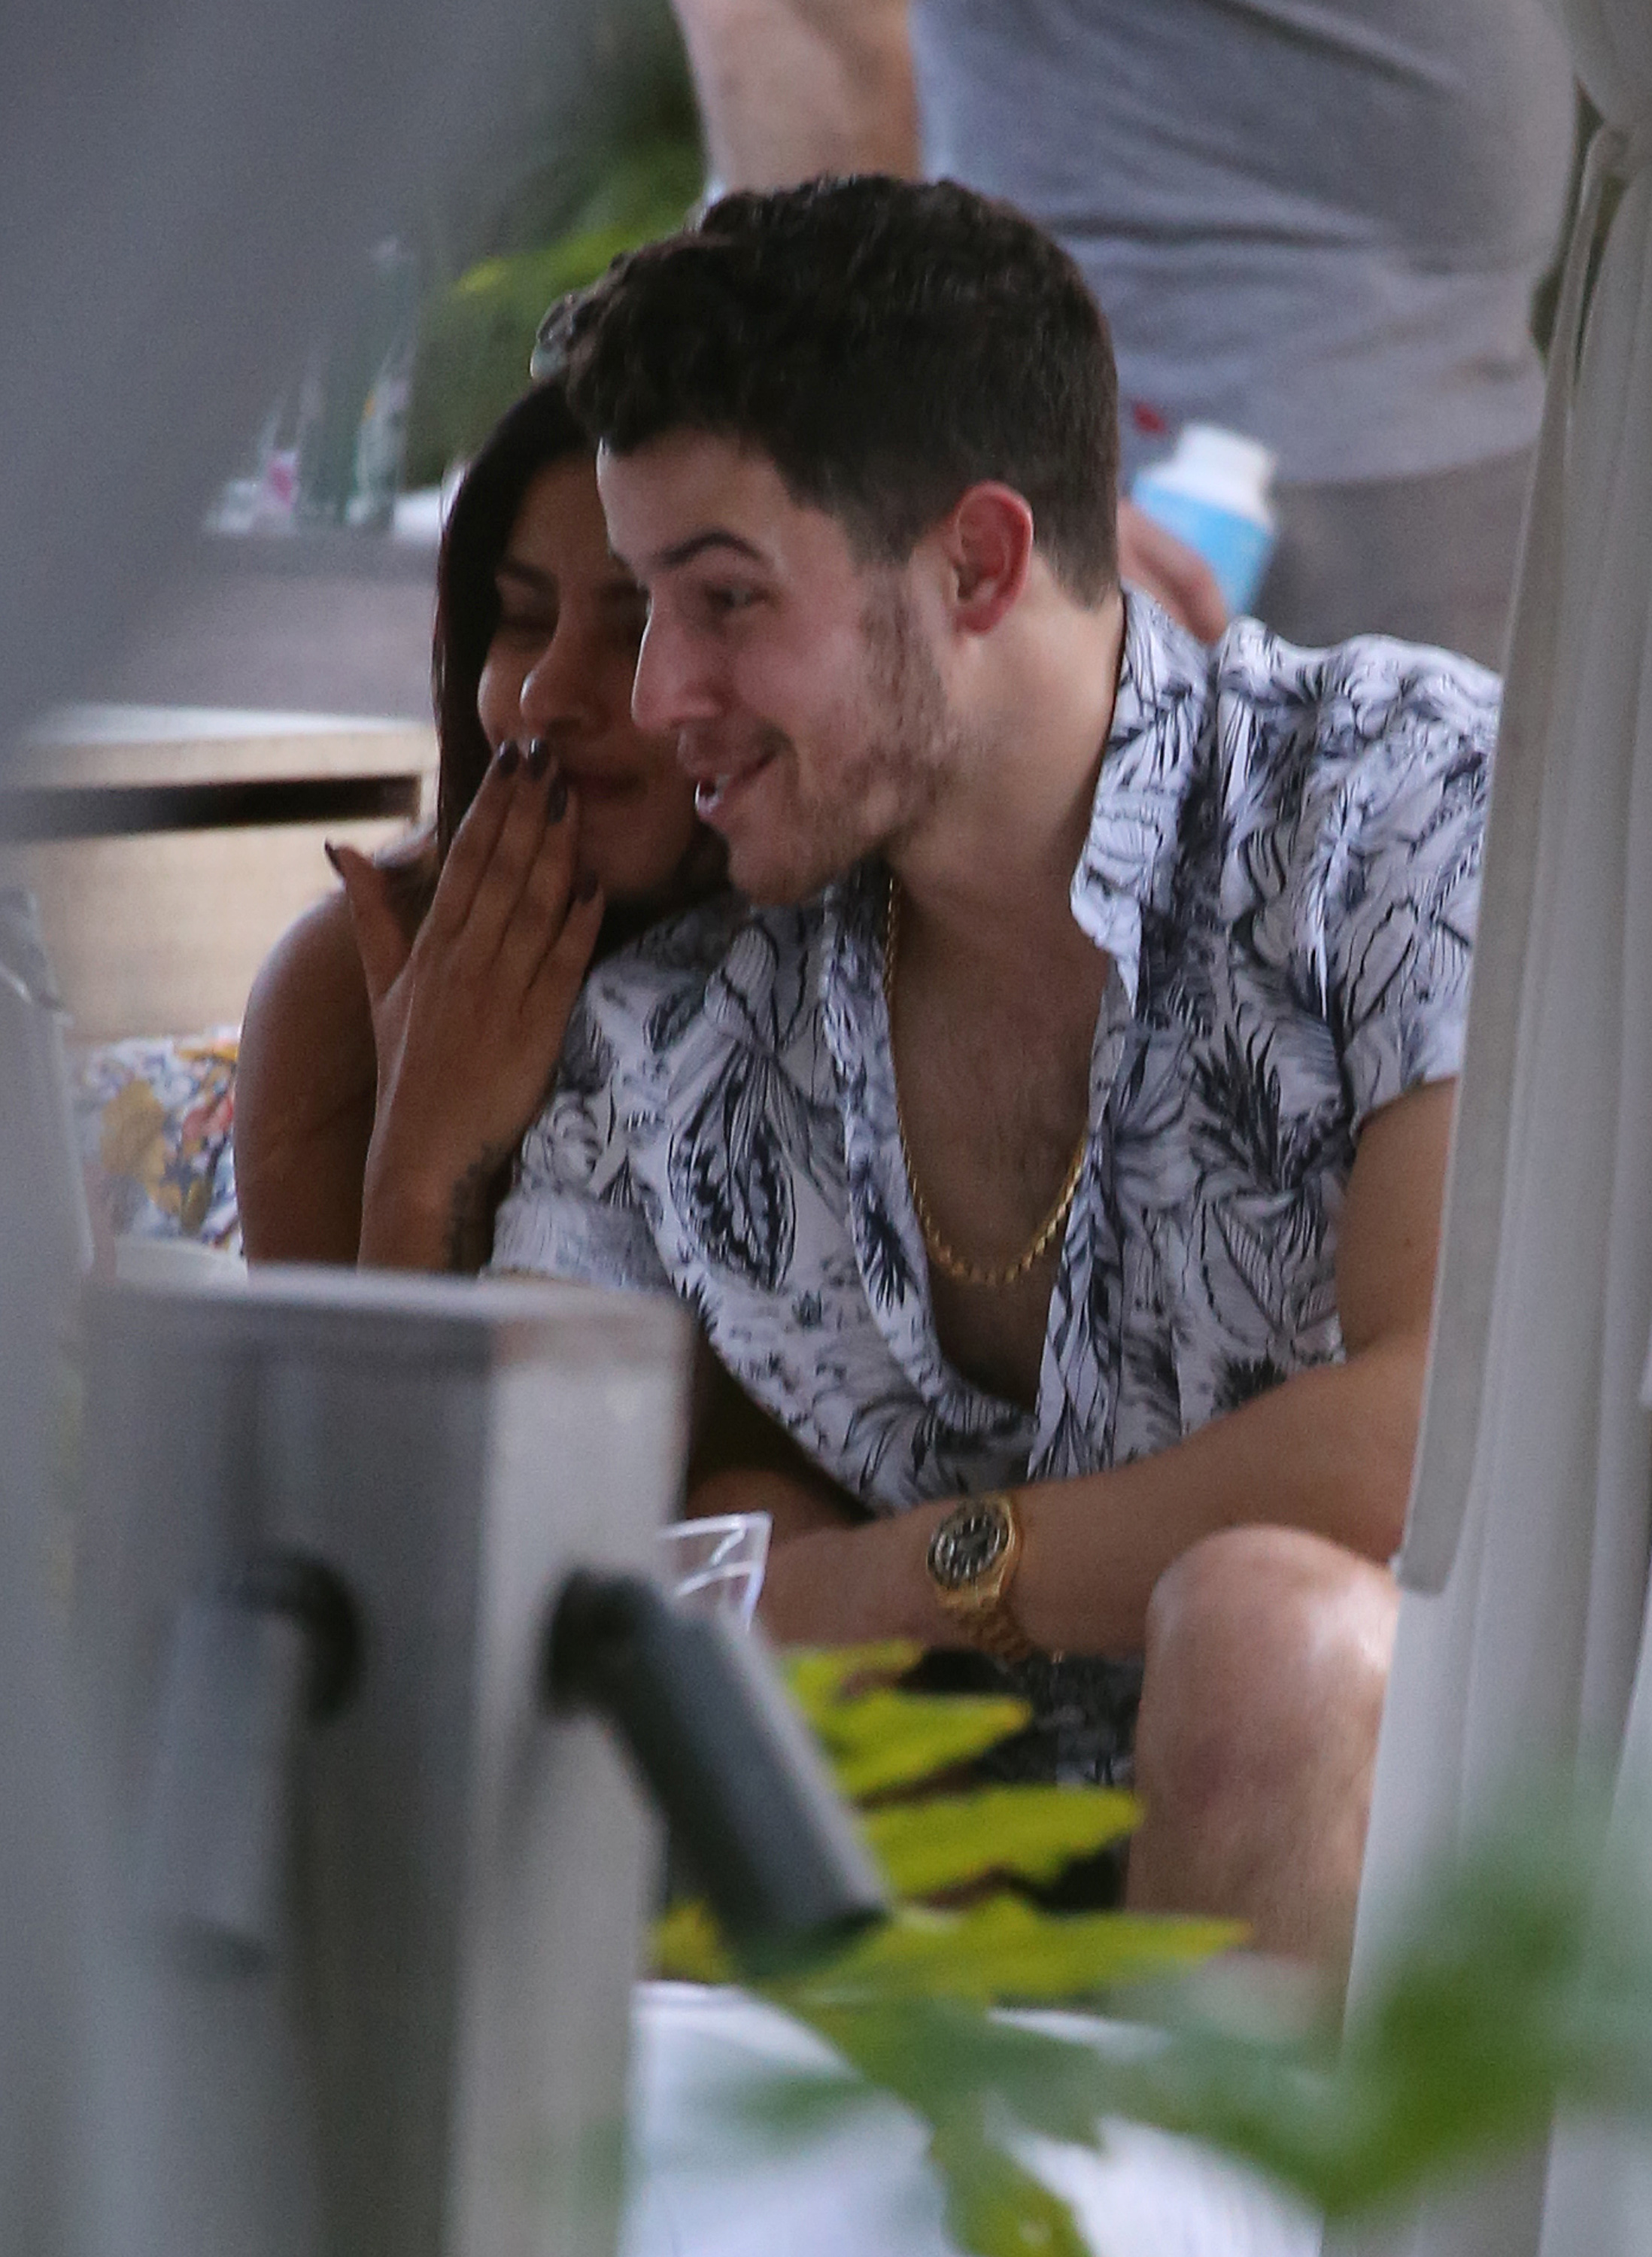 Xxx On Nick Jonas - Nick Jonas and Priyanka Chopra Are So Cute Snuggled By the Pool